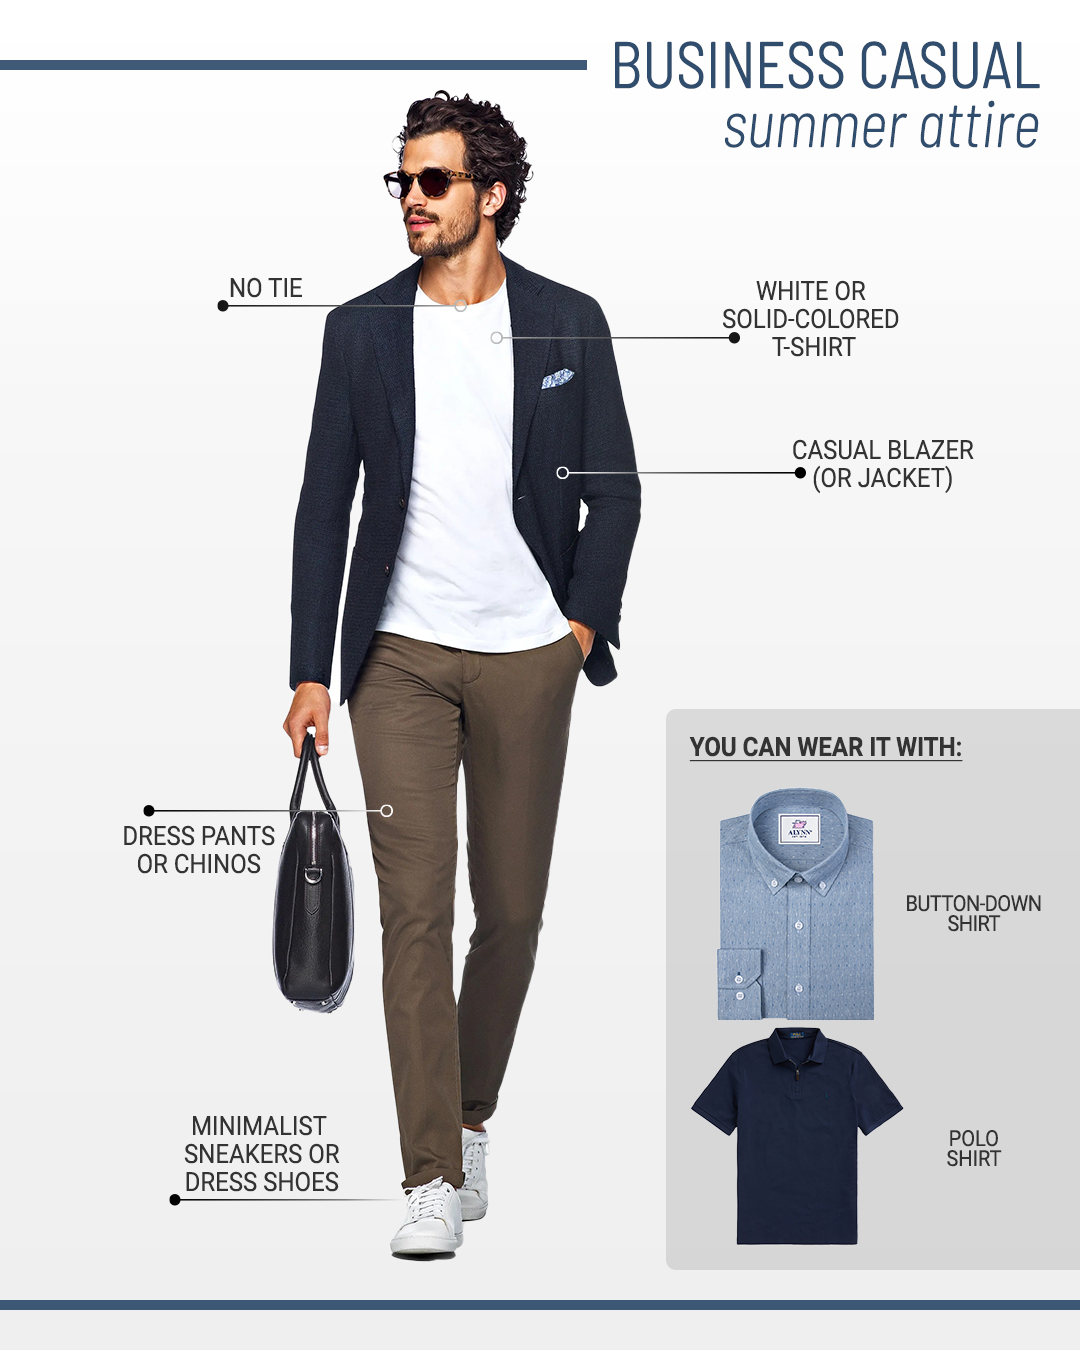 Business-casual dress code attire for men